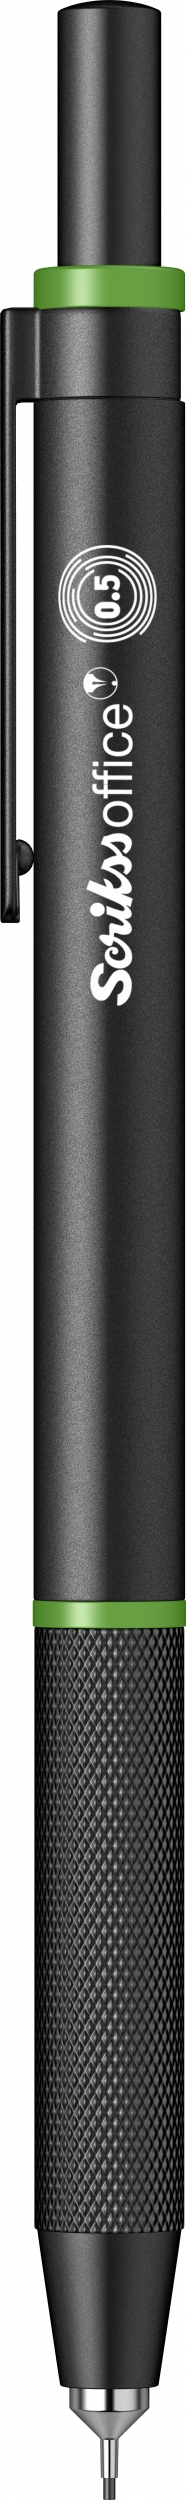 Механичен молив Twist Scrikss 0,5мм., модел 87456, Зелен